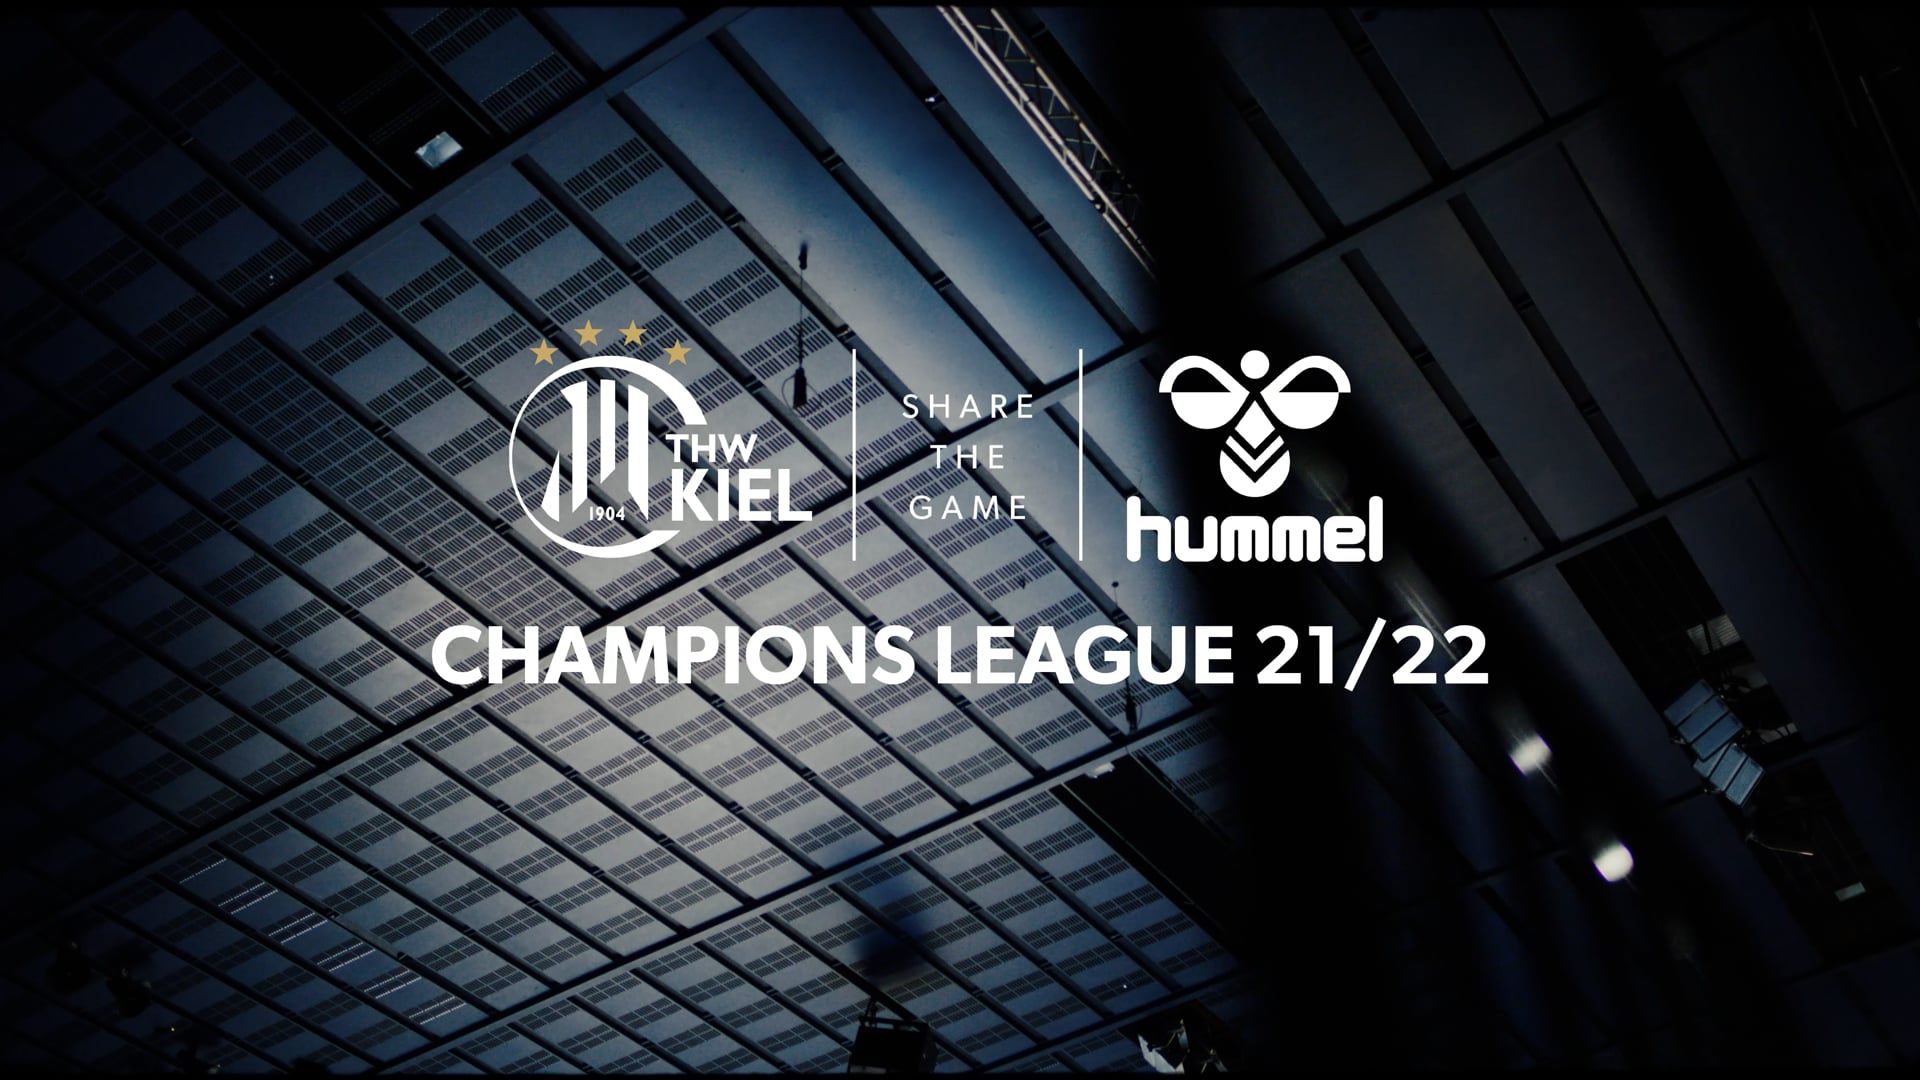 Hummel - Champions League Jersy